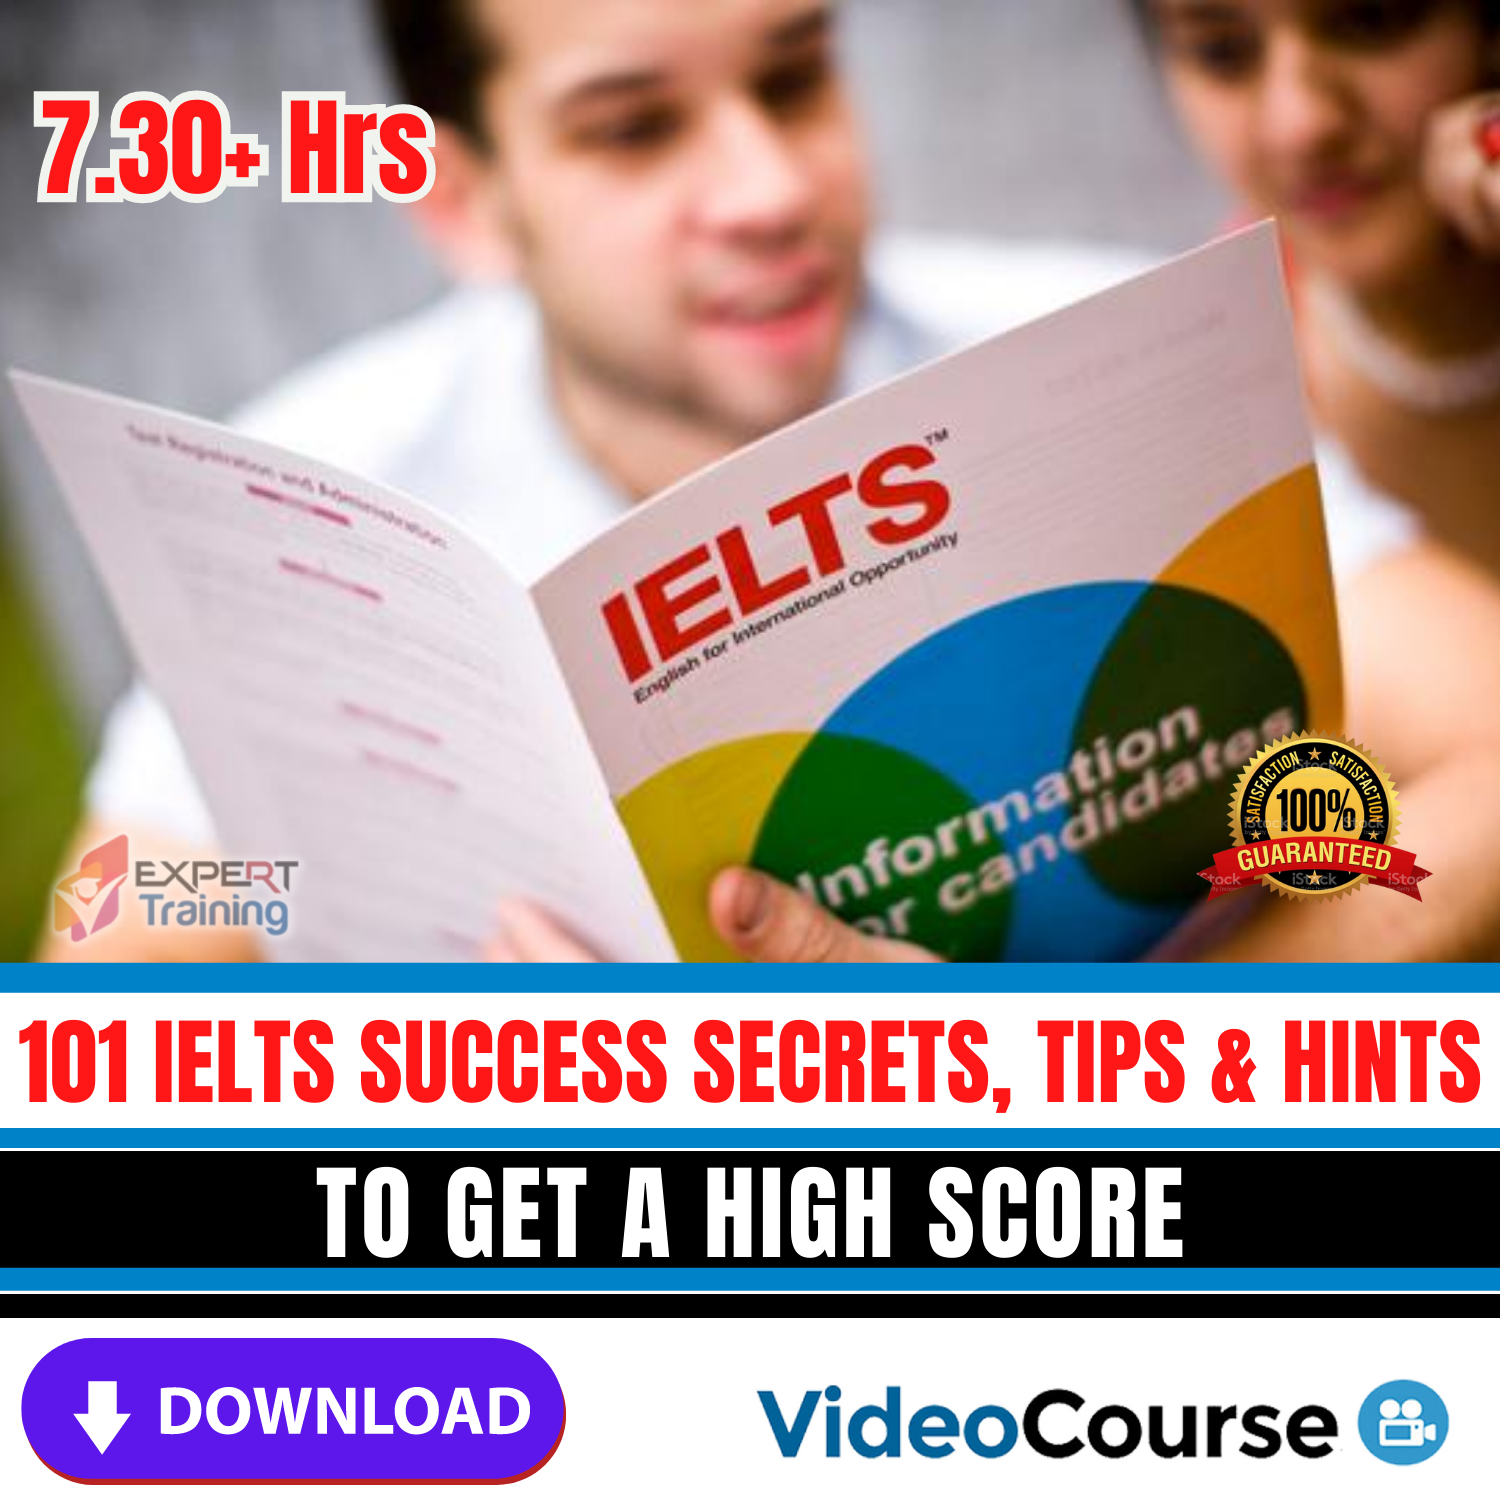 101 IELTS SUCCESS SECRETS, TIPS & HINTS TO GET A HIGH SCORE